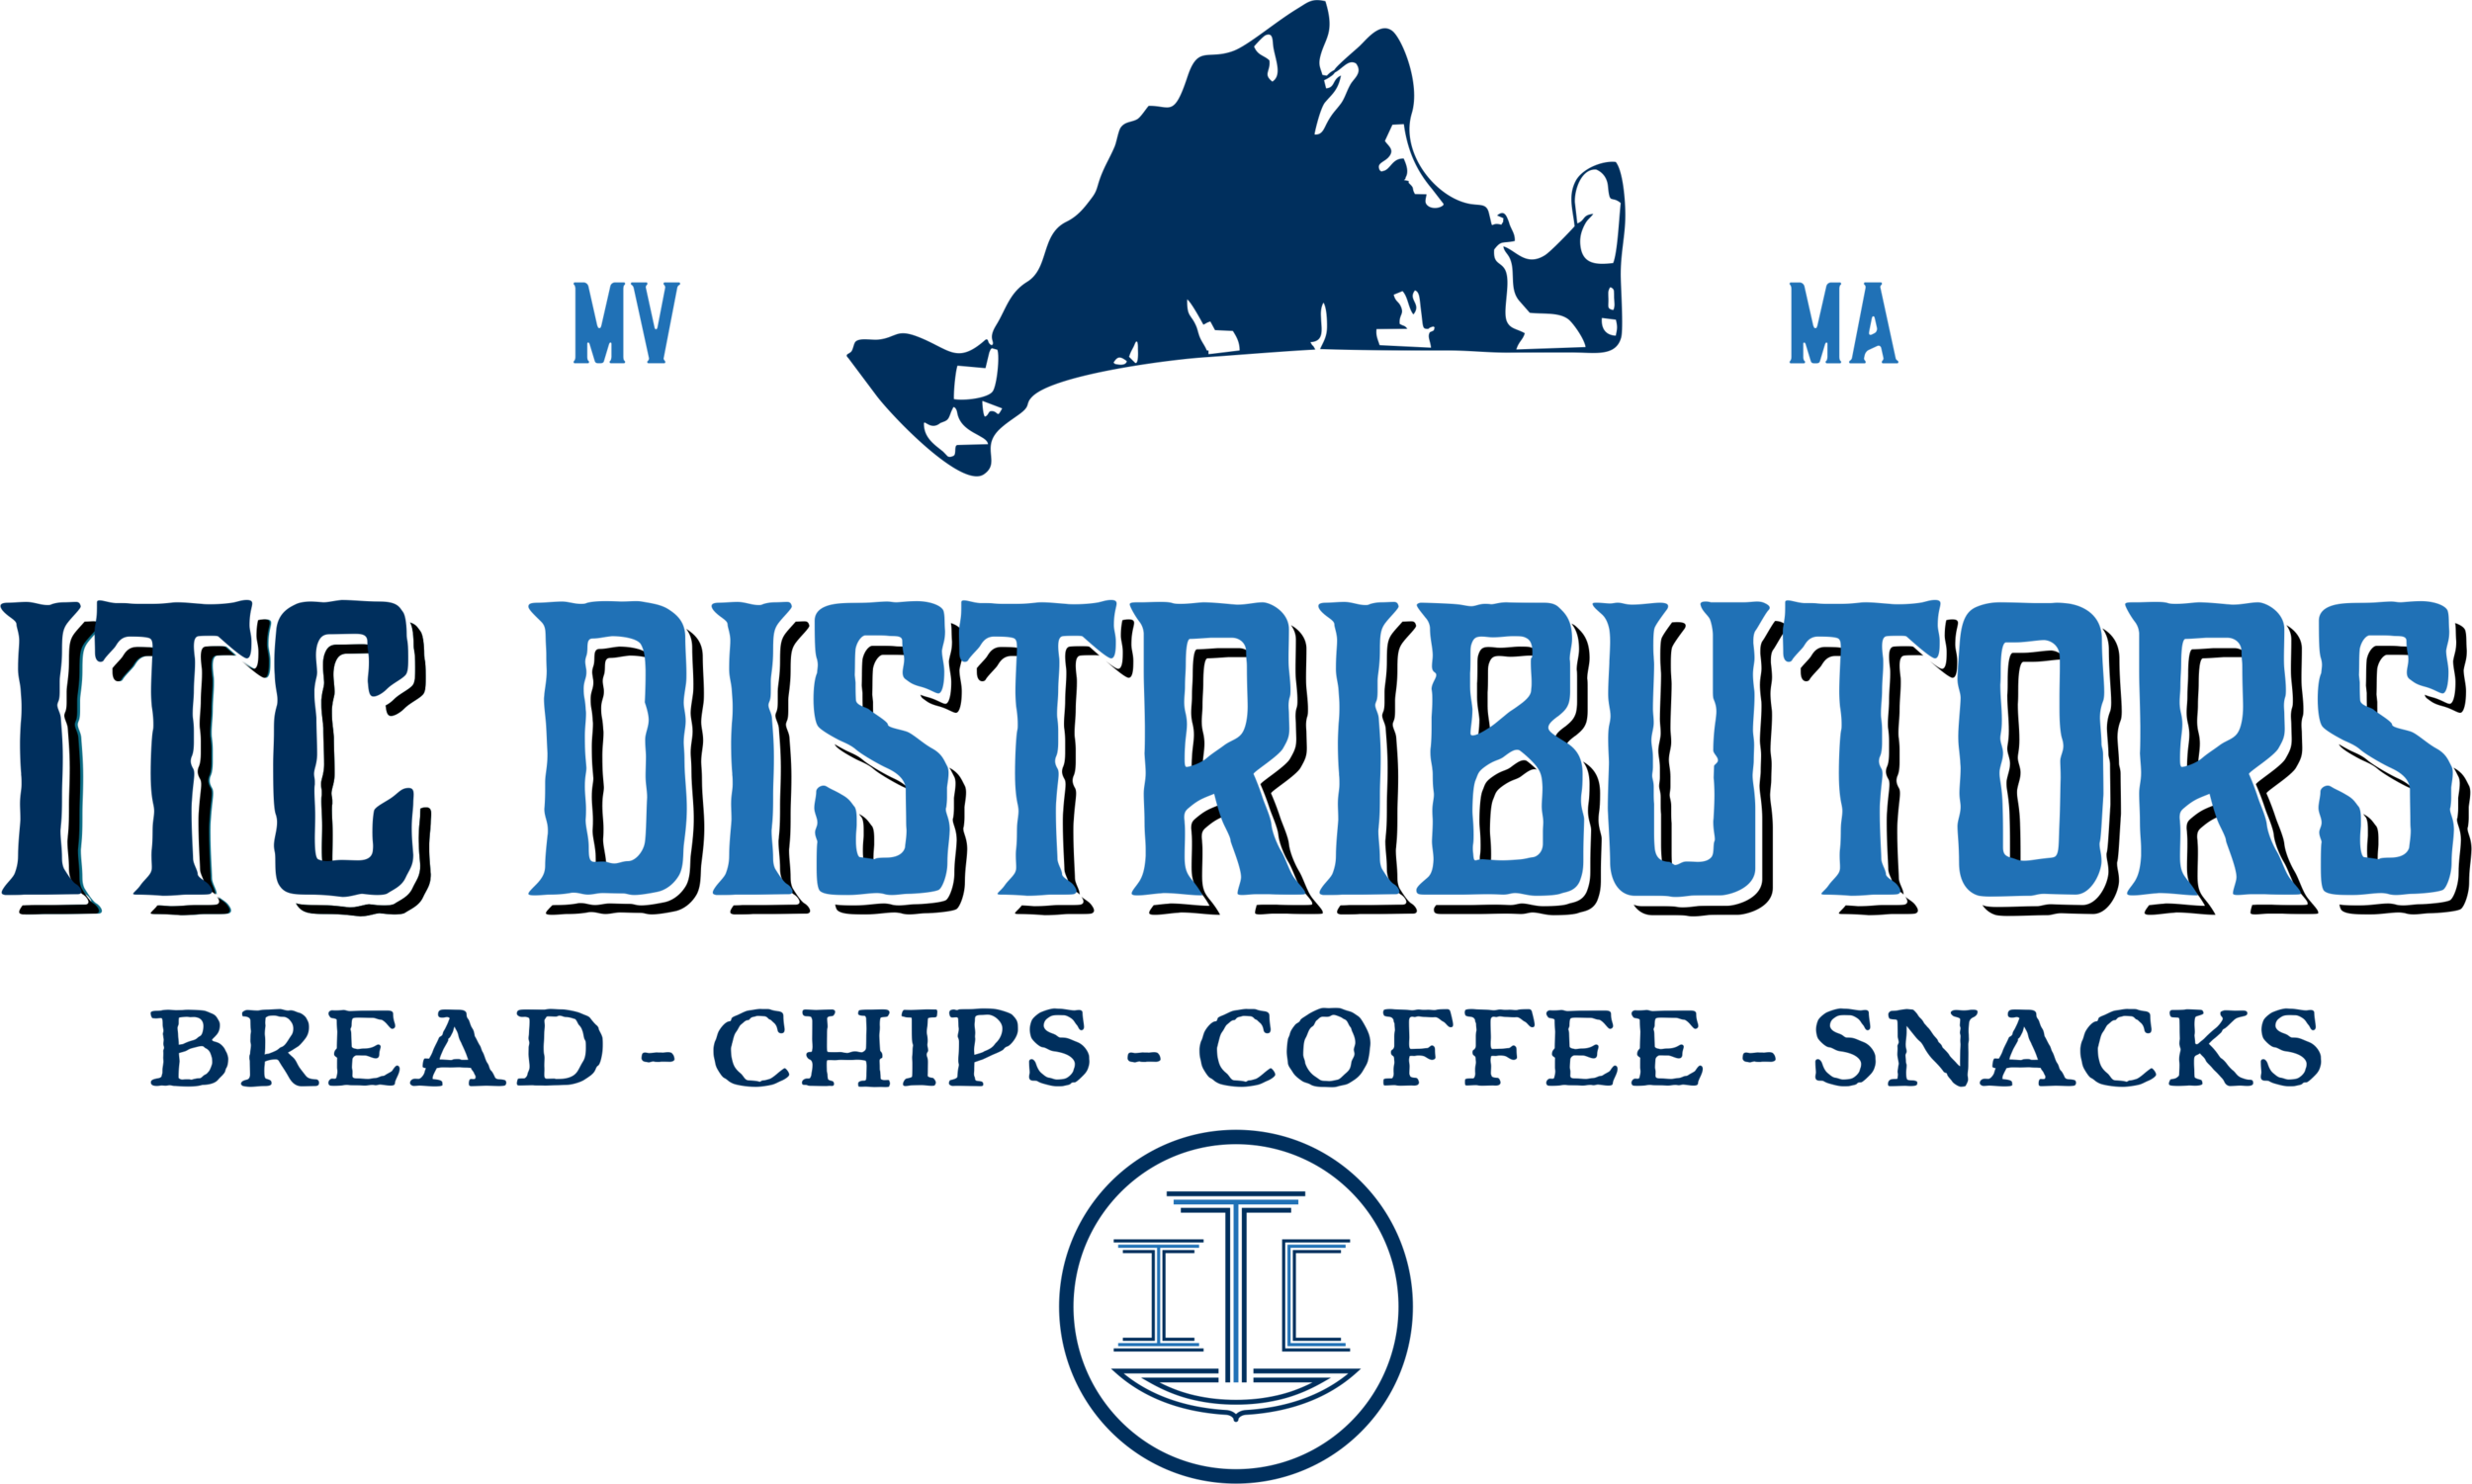 ITC Distributors LLC